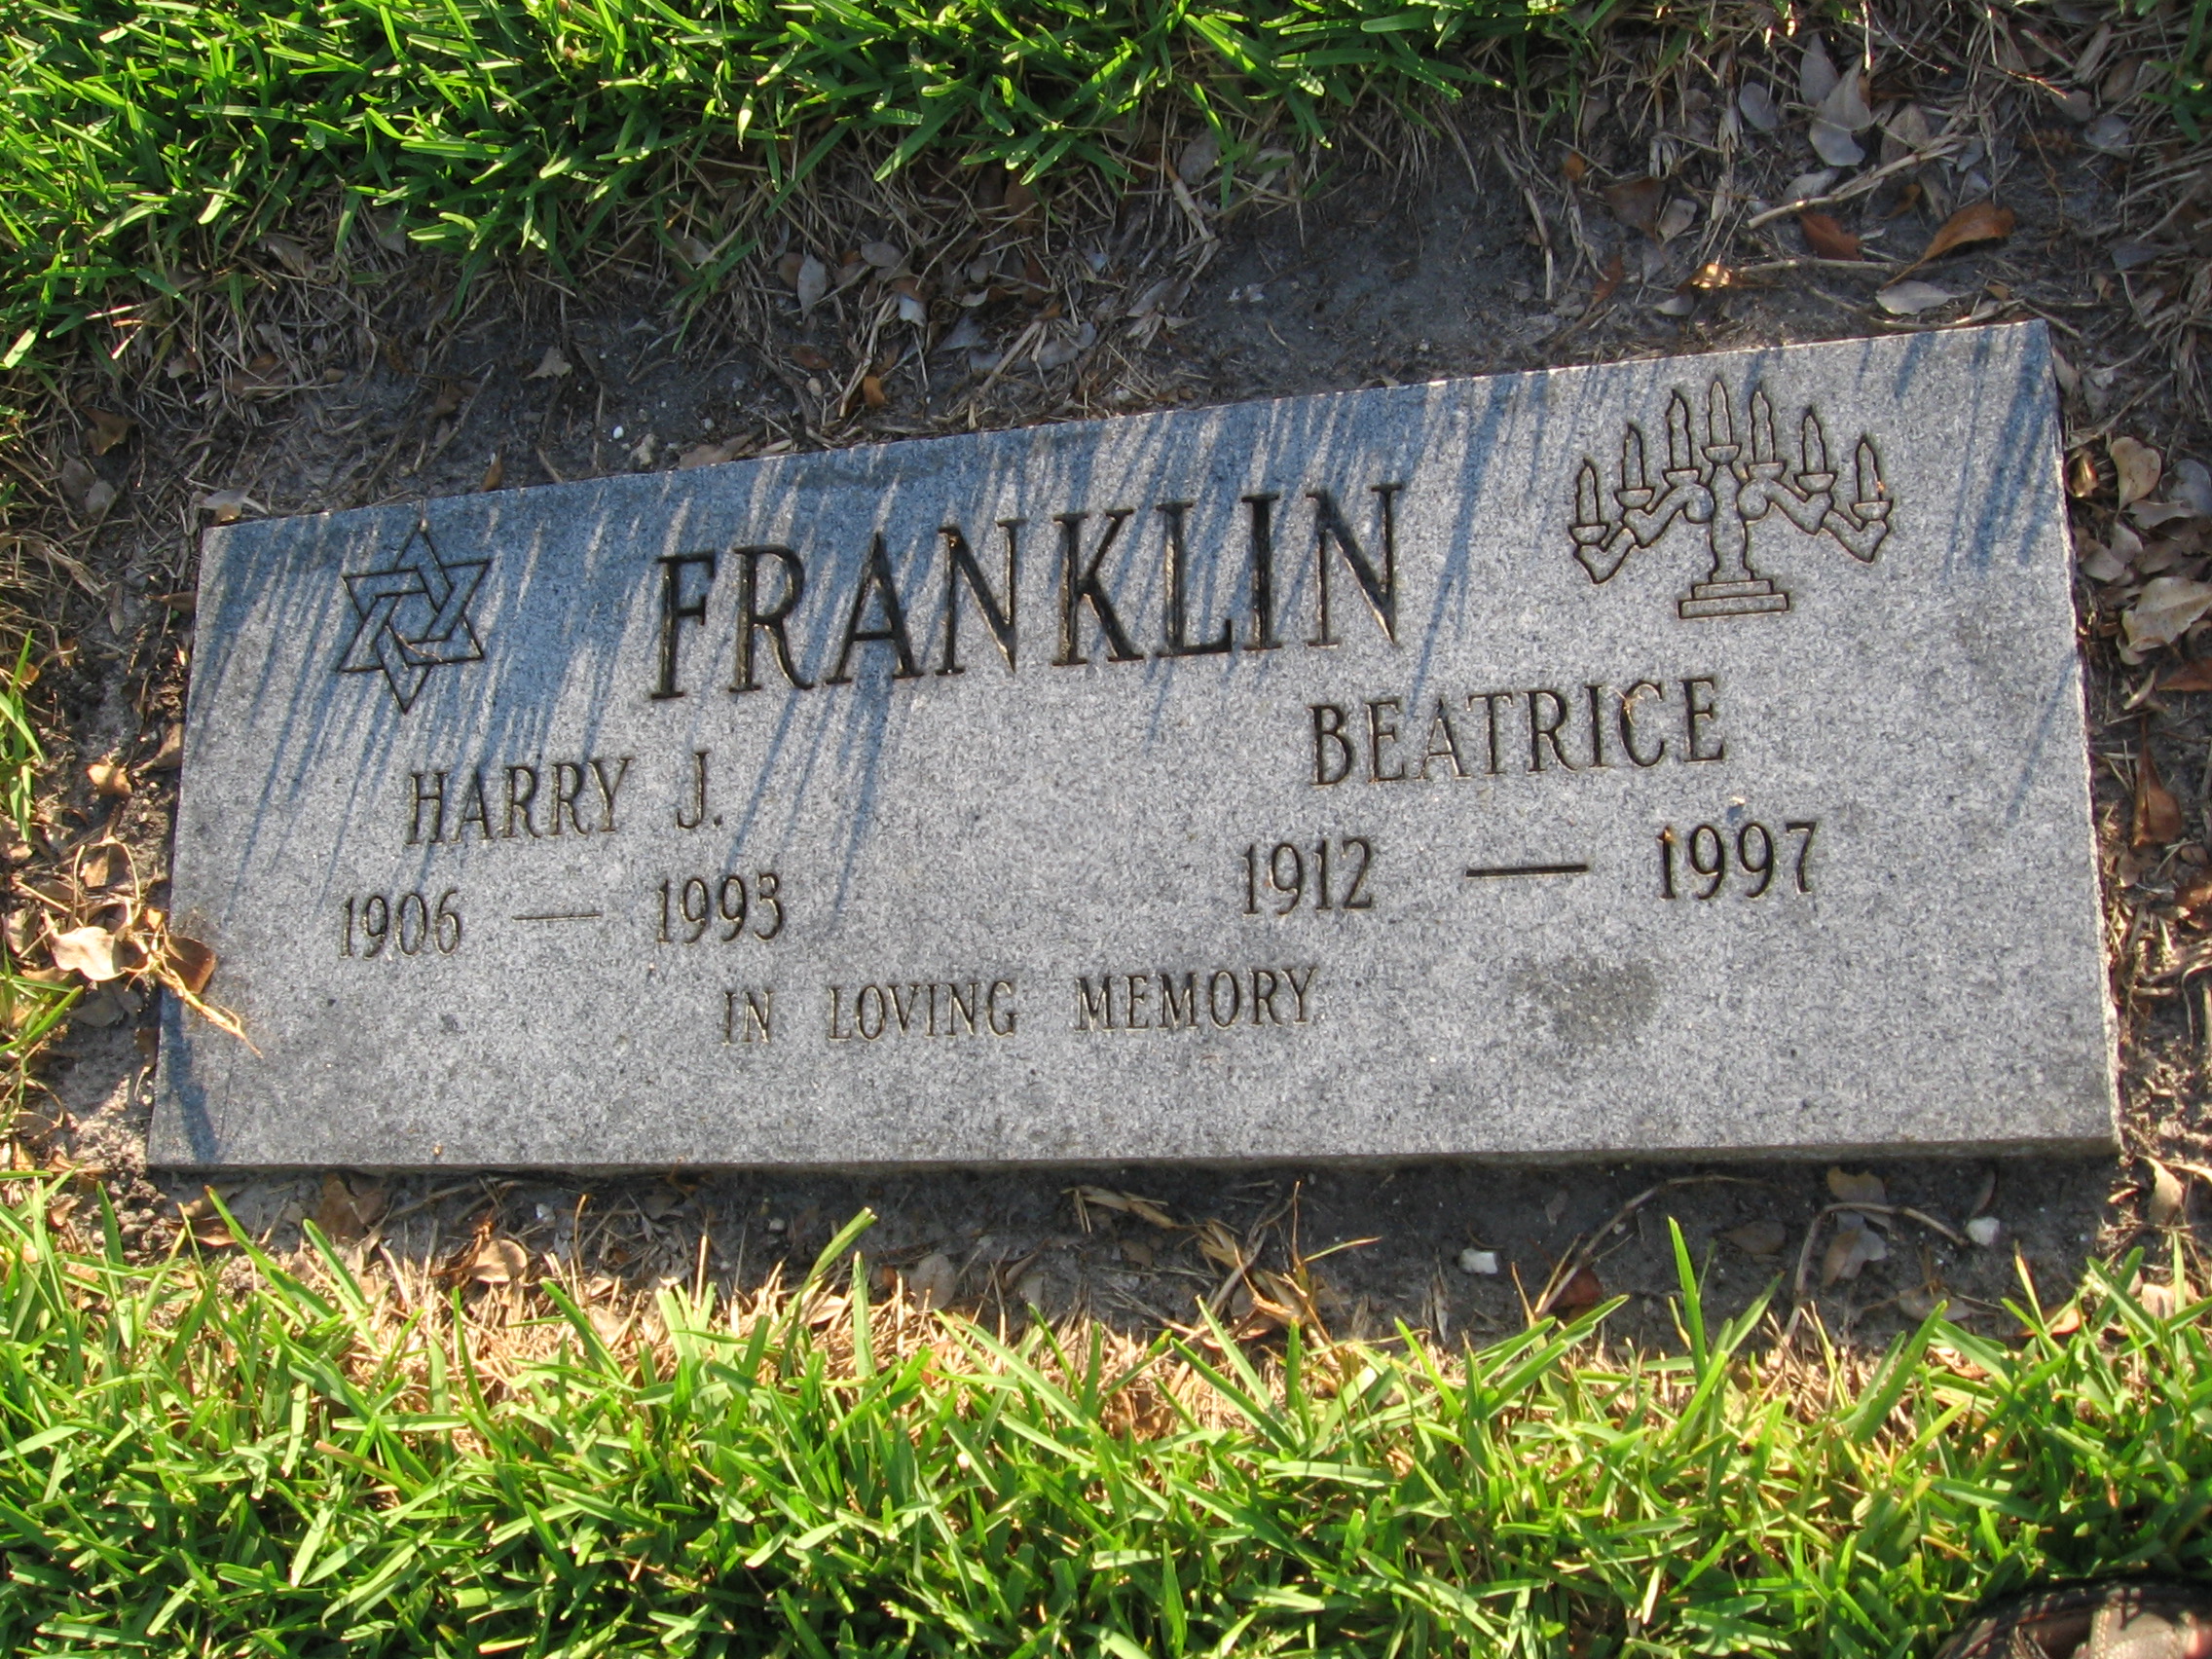 Harry J Franklin